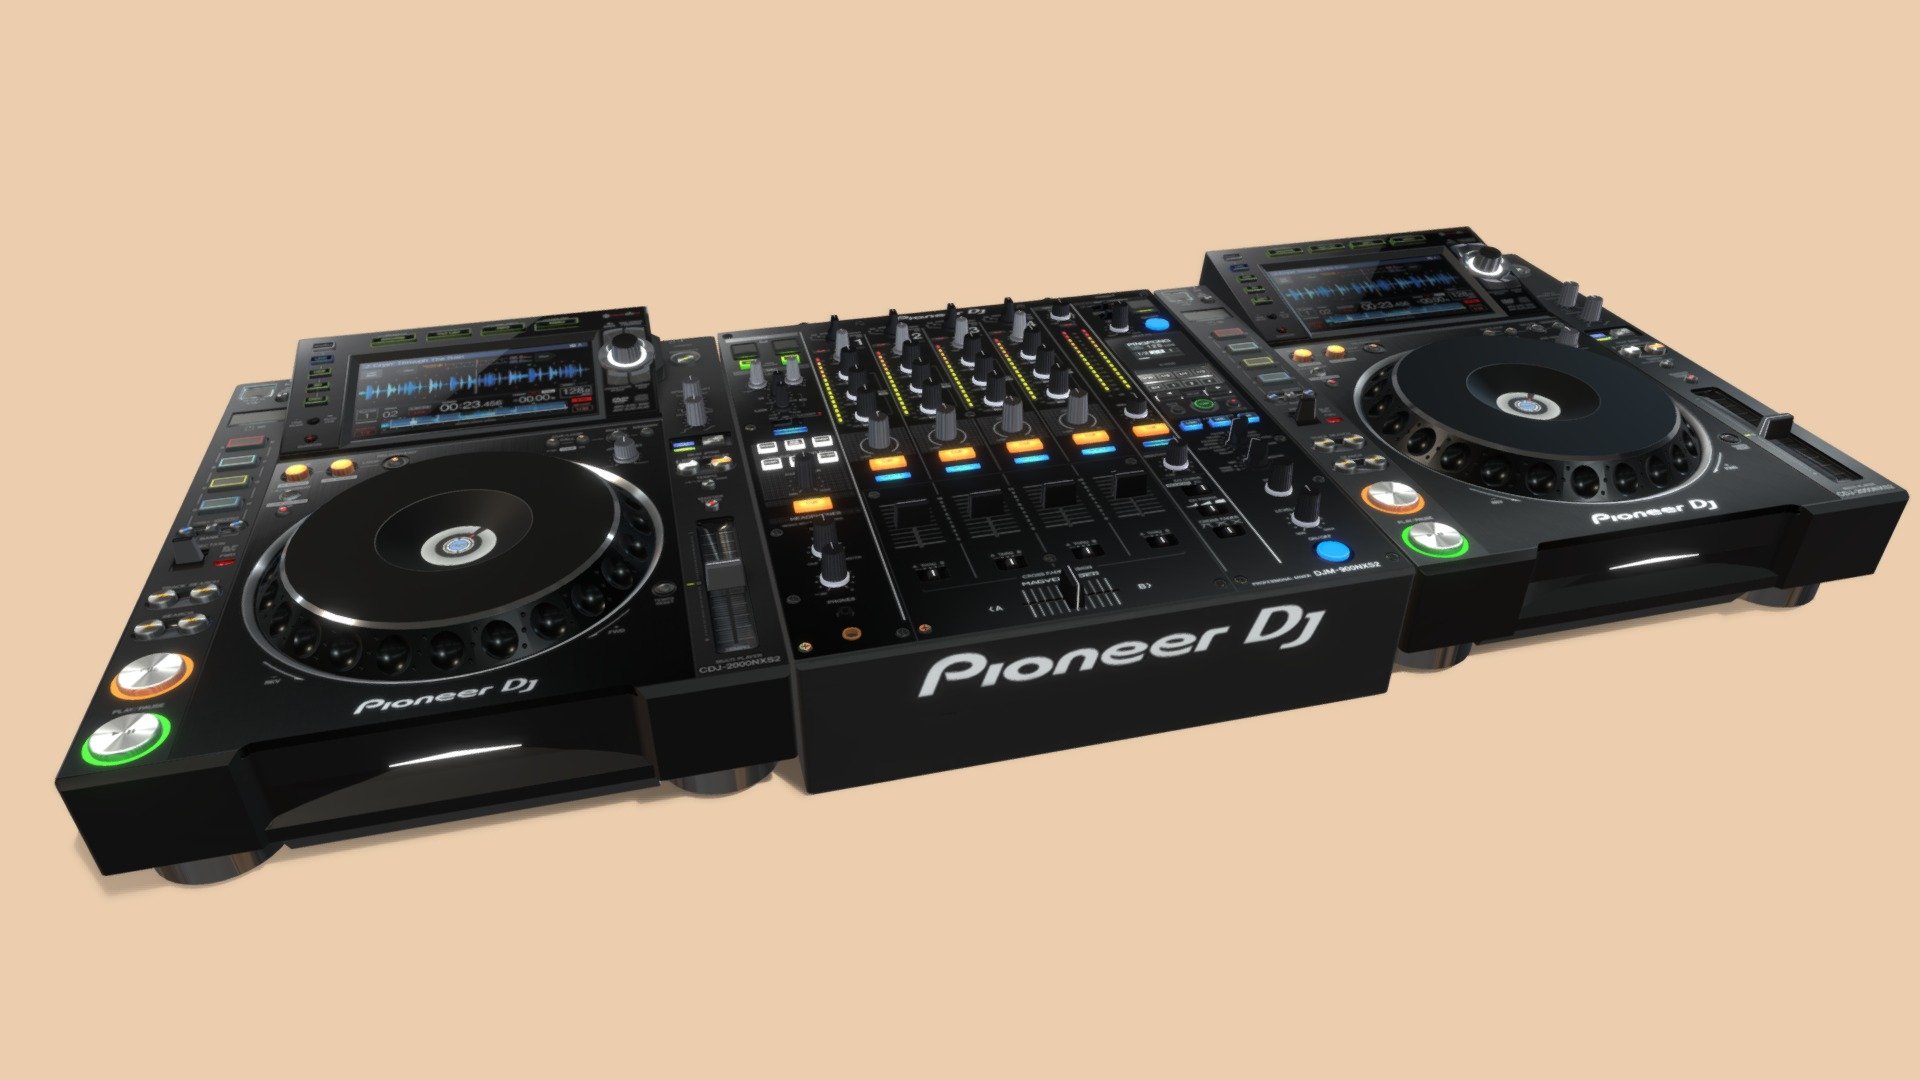 1x Pioneer DJM 900 NXS2

2x Pioneer CDJ 2000 Nexus 2
 - Pioneer DJ Mixer - 3D model by sevenhannover 3d model